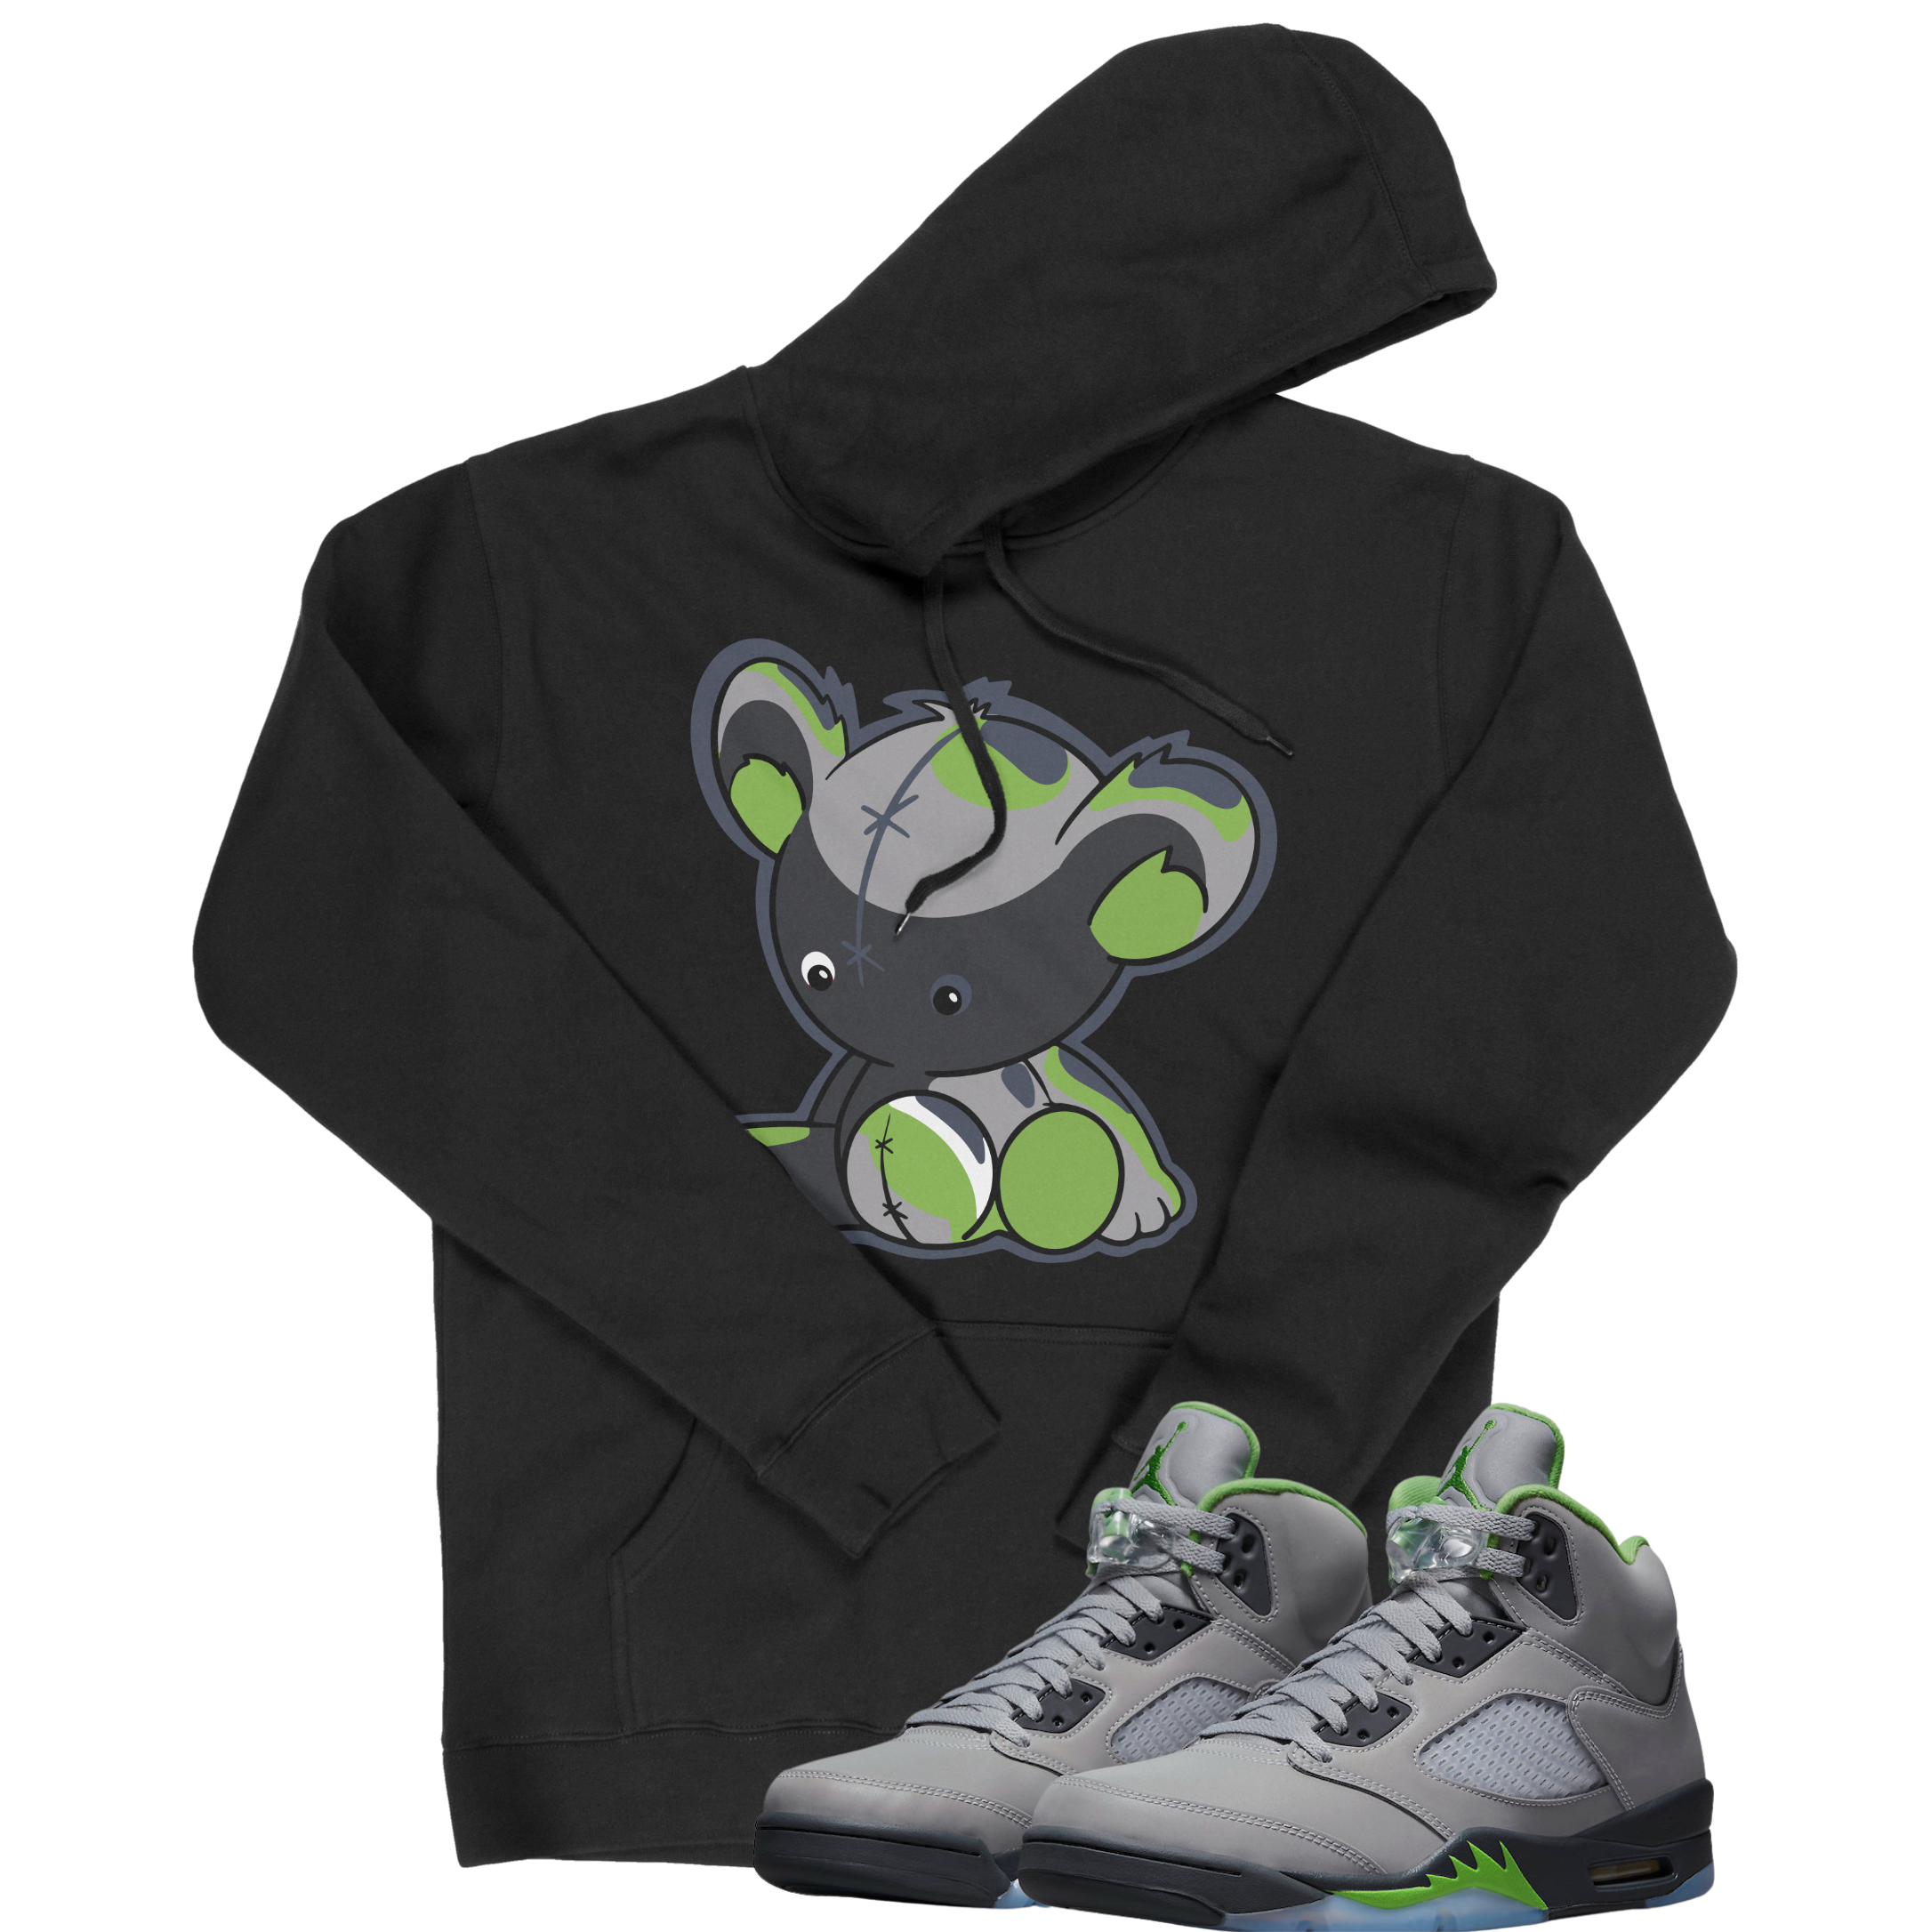 Air Jordan 5 Green Bean I Bear Hoodie | Air Jordan 5 Green Bean | Sneaker Match | Jordan Matching Outfits